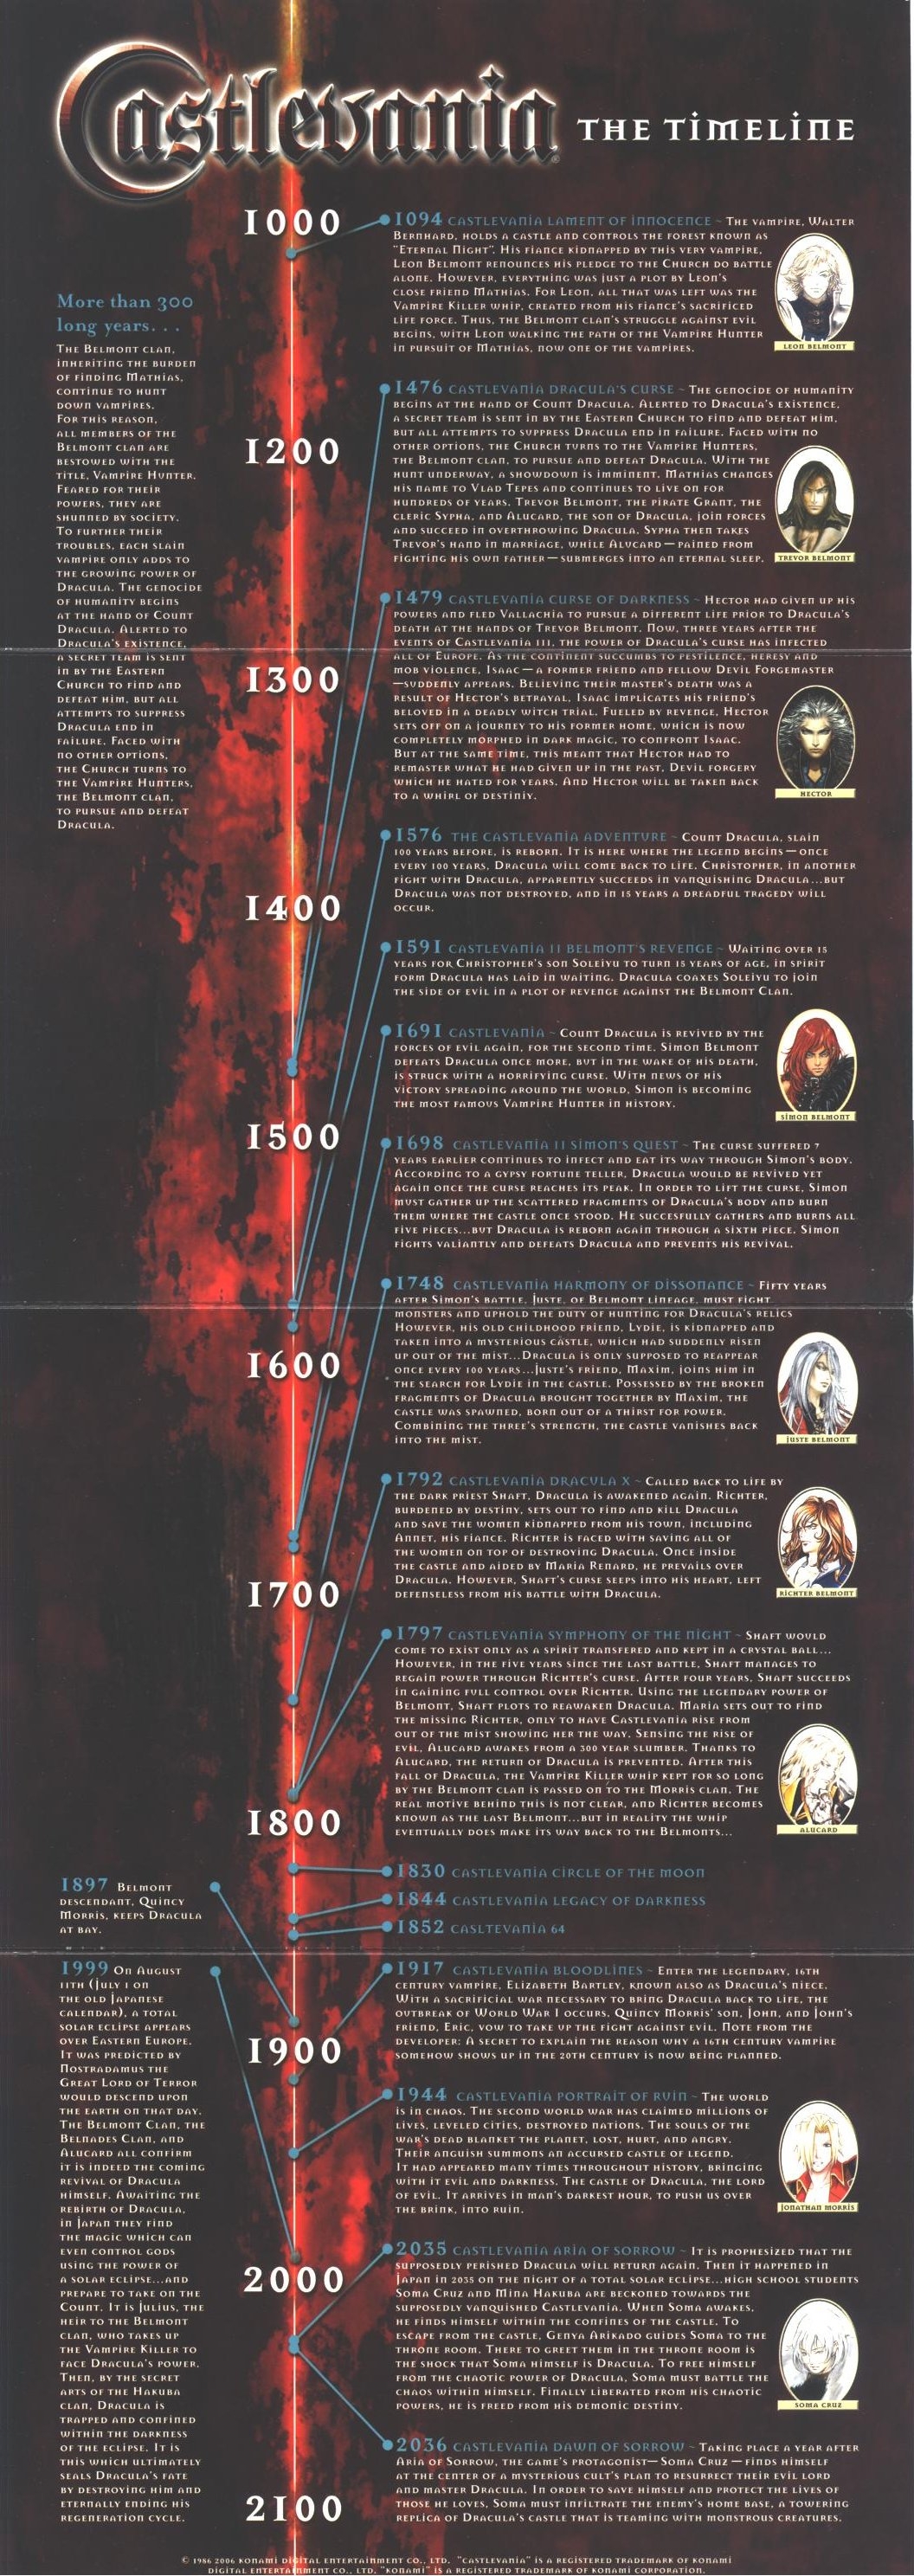 Castlevania Timeline, Poster 30